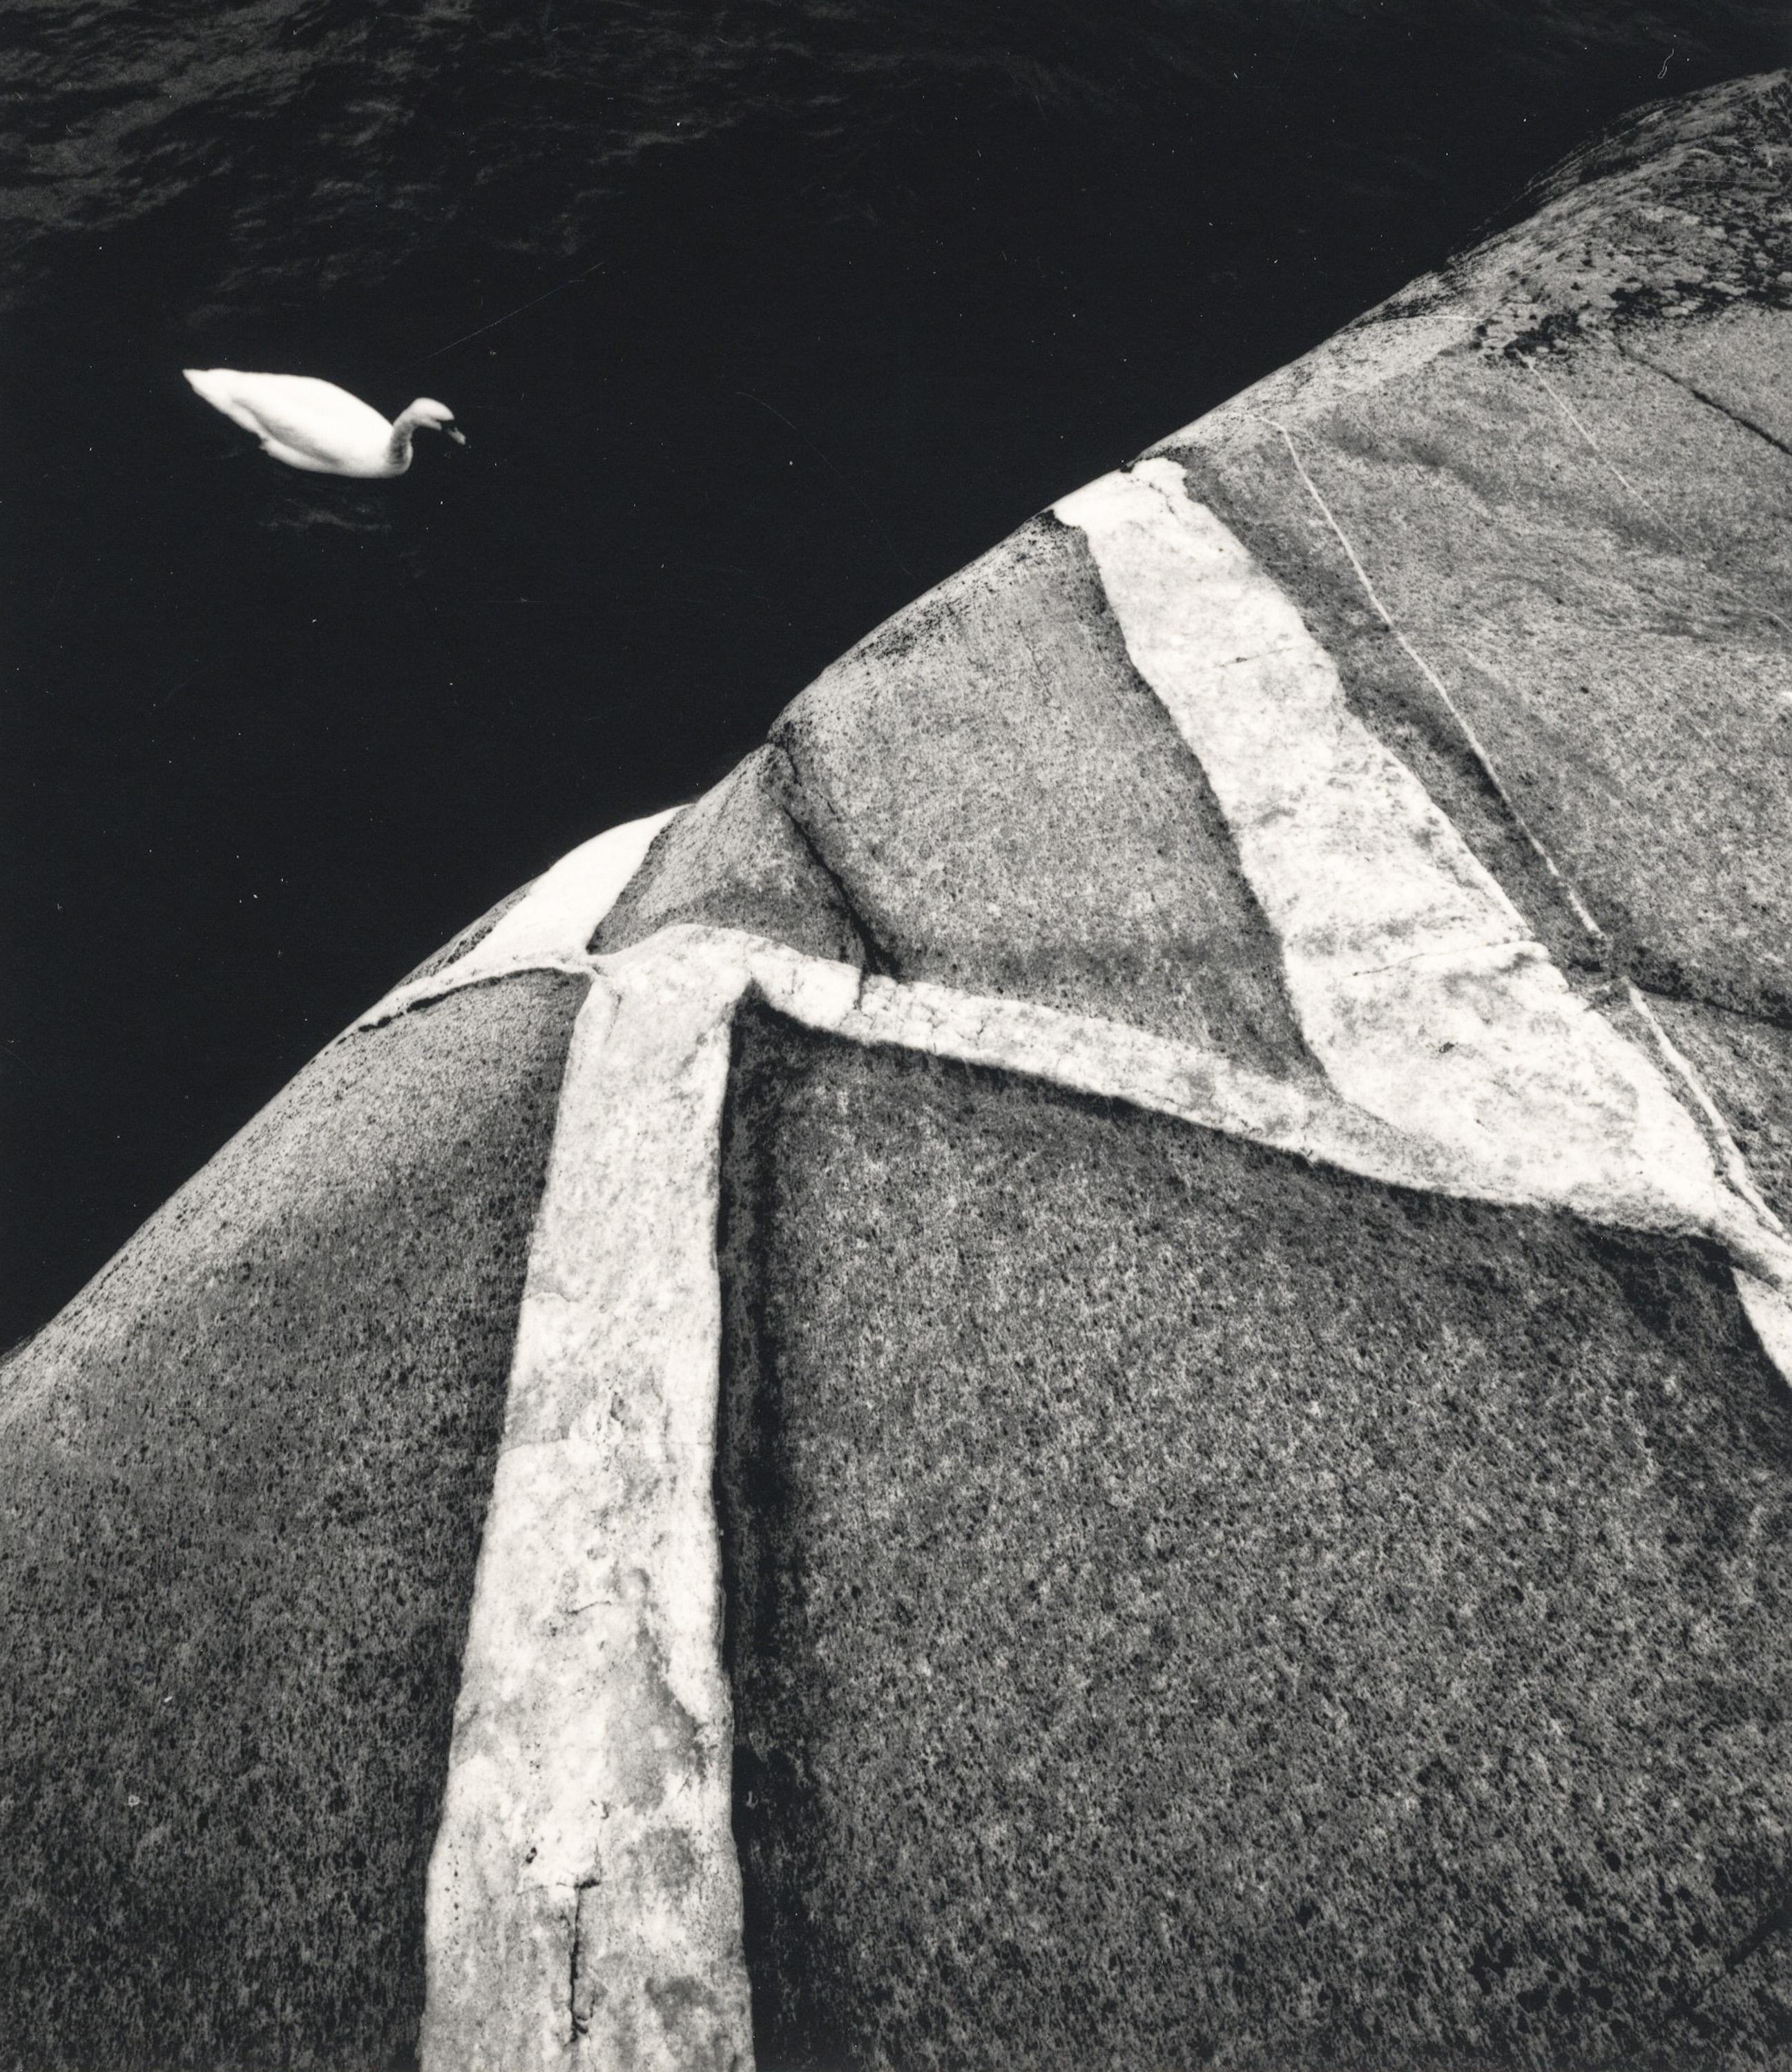 Pentti Sammallahti Abstract Photograph - Kokar, Finland (Abstract Rock Formation and Swimming Swan)